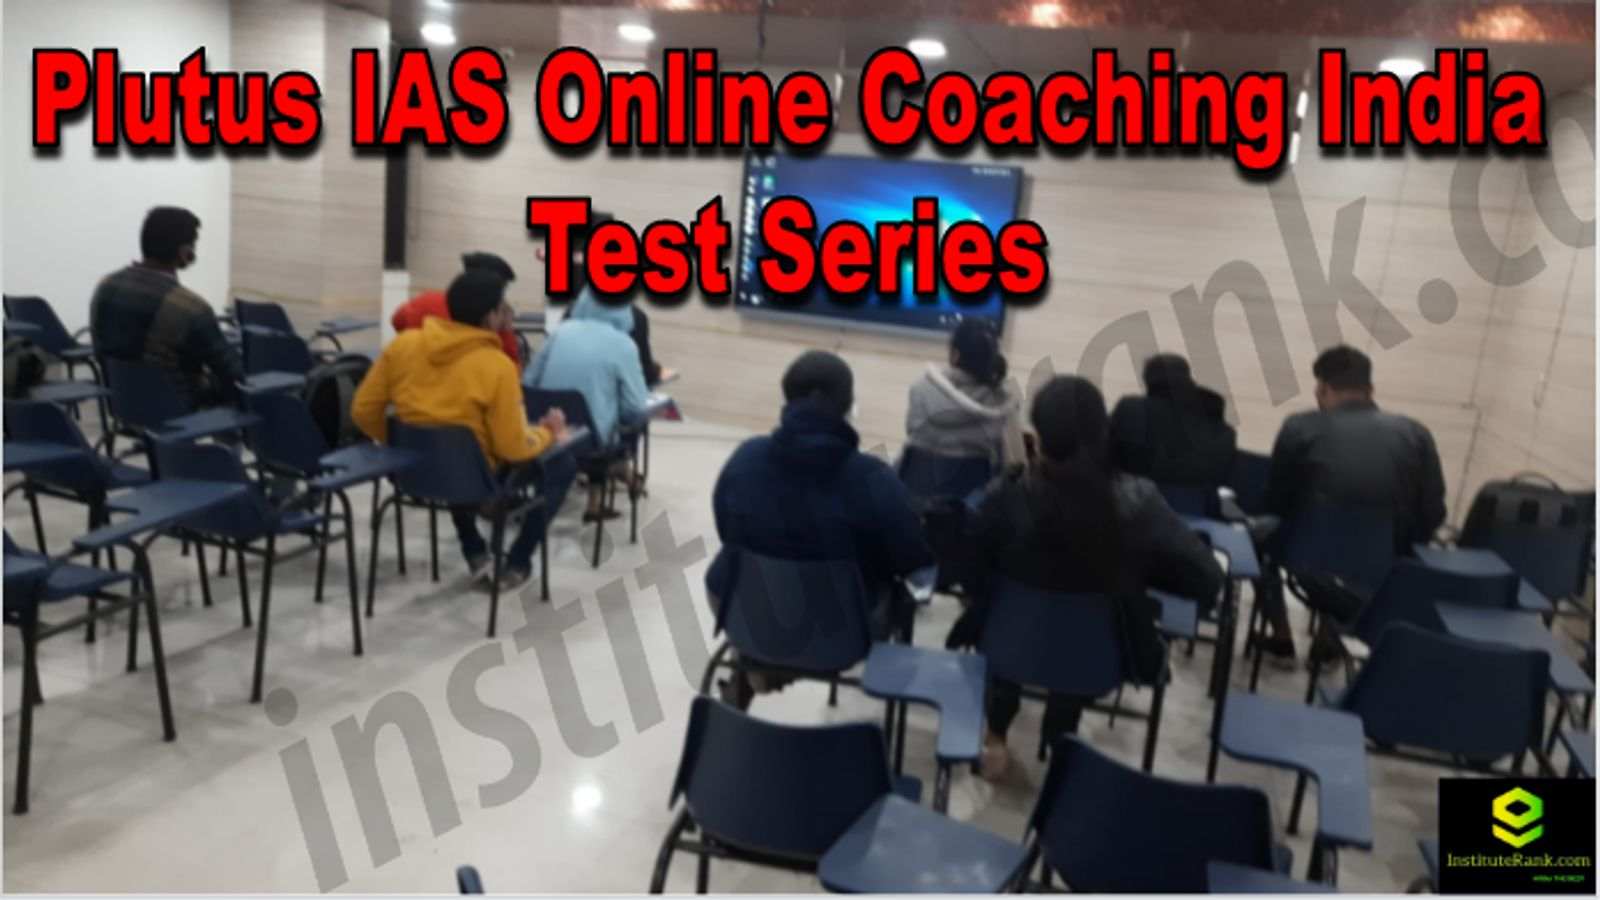 Plutus IAS Online Coaching India Reviews Test Series